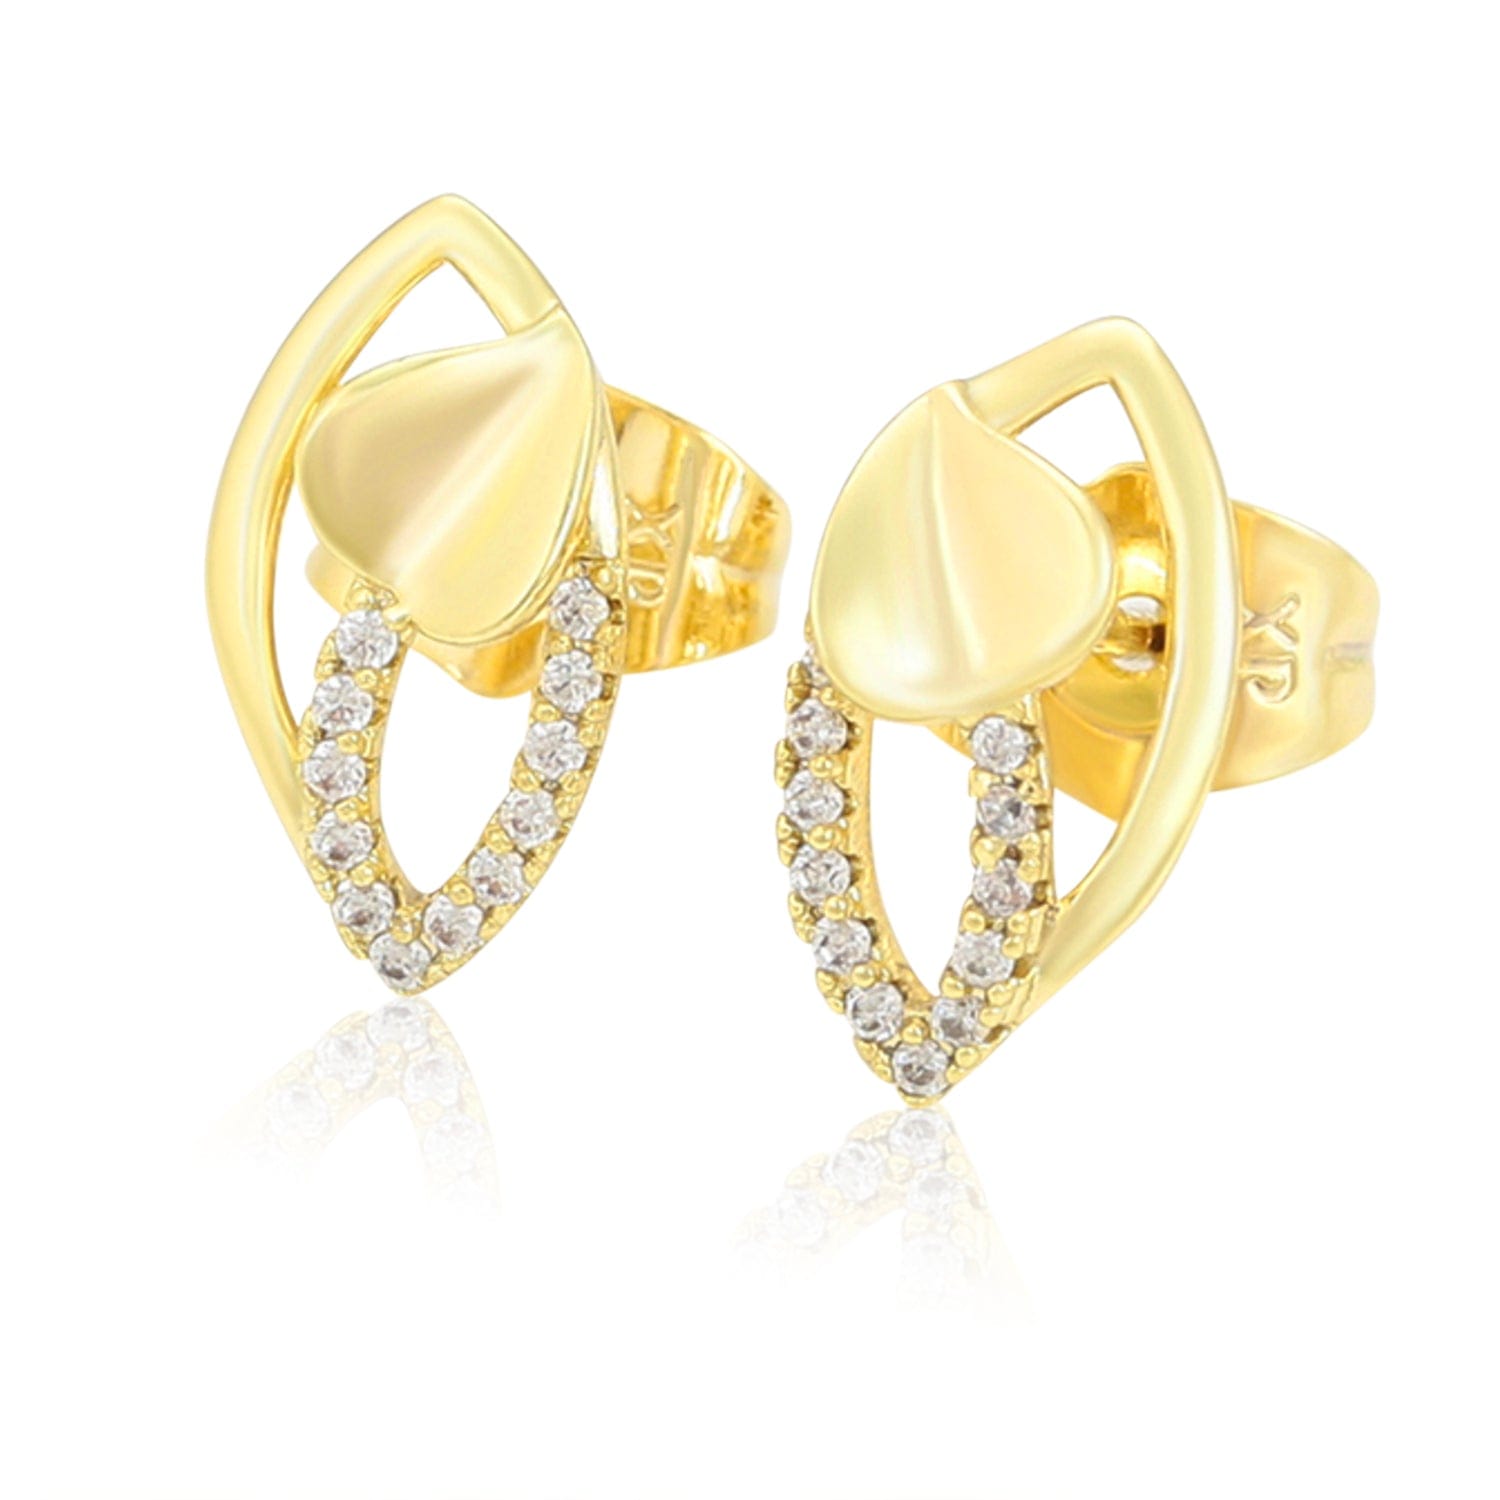 bianco rosso Earrings A00863343 cyprus greece jewelry gift free shipping europe worldwide